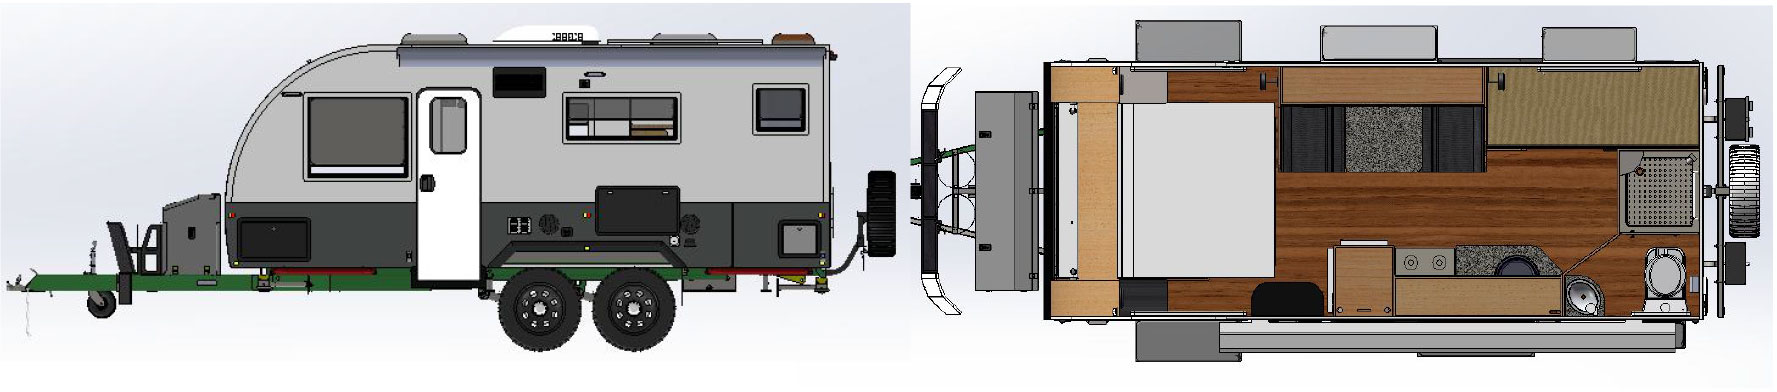 Modcon RV hybrid camper trailers C19 layout